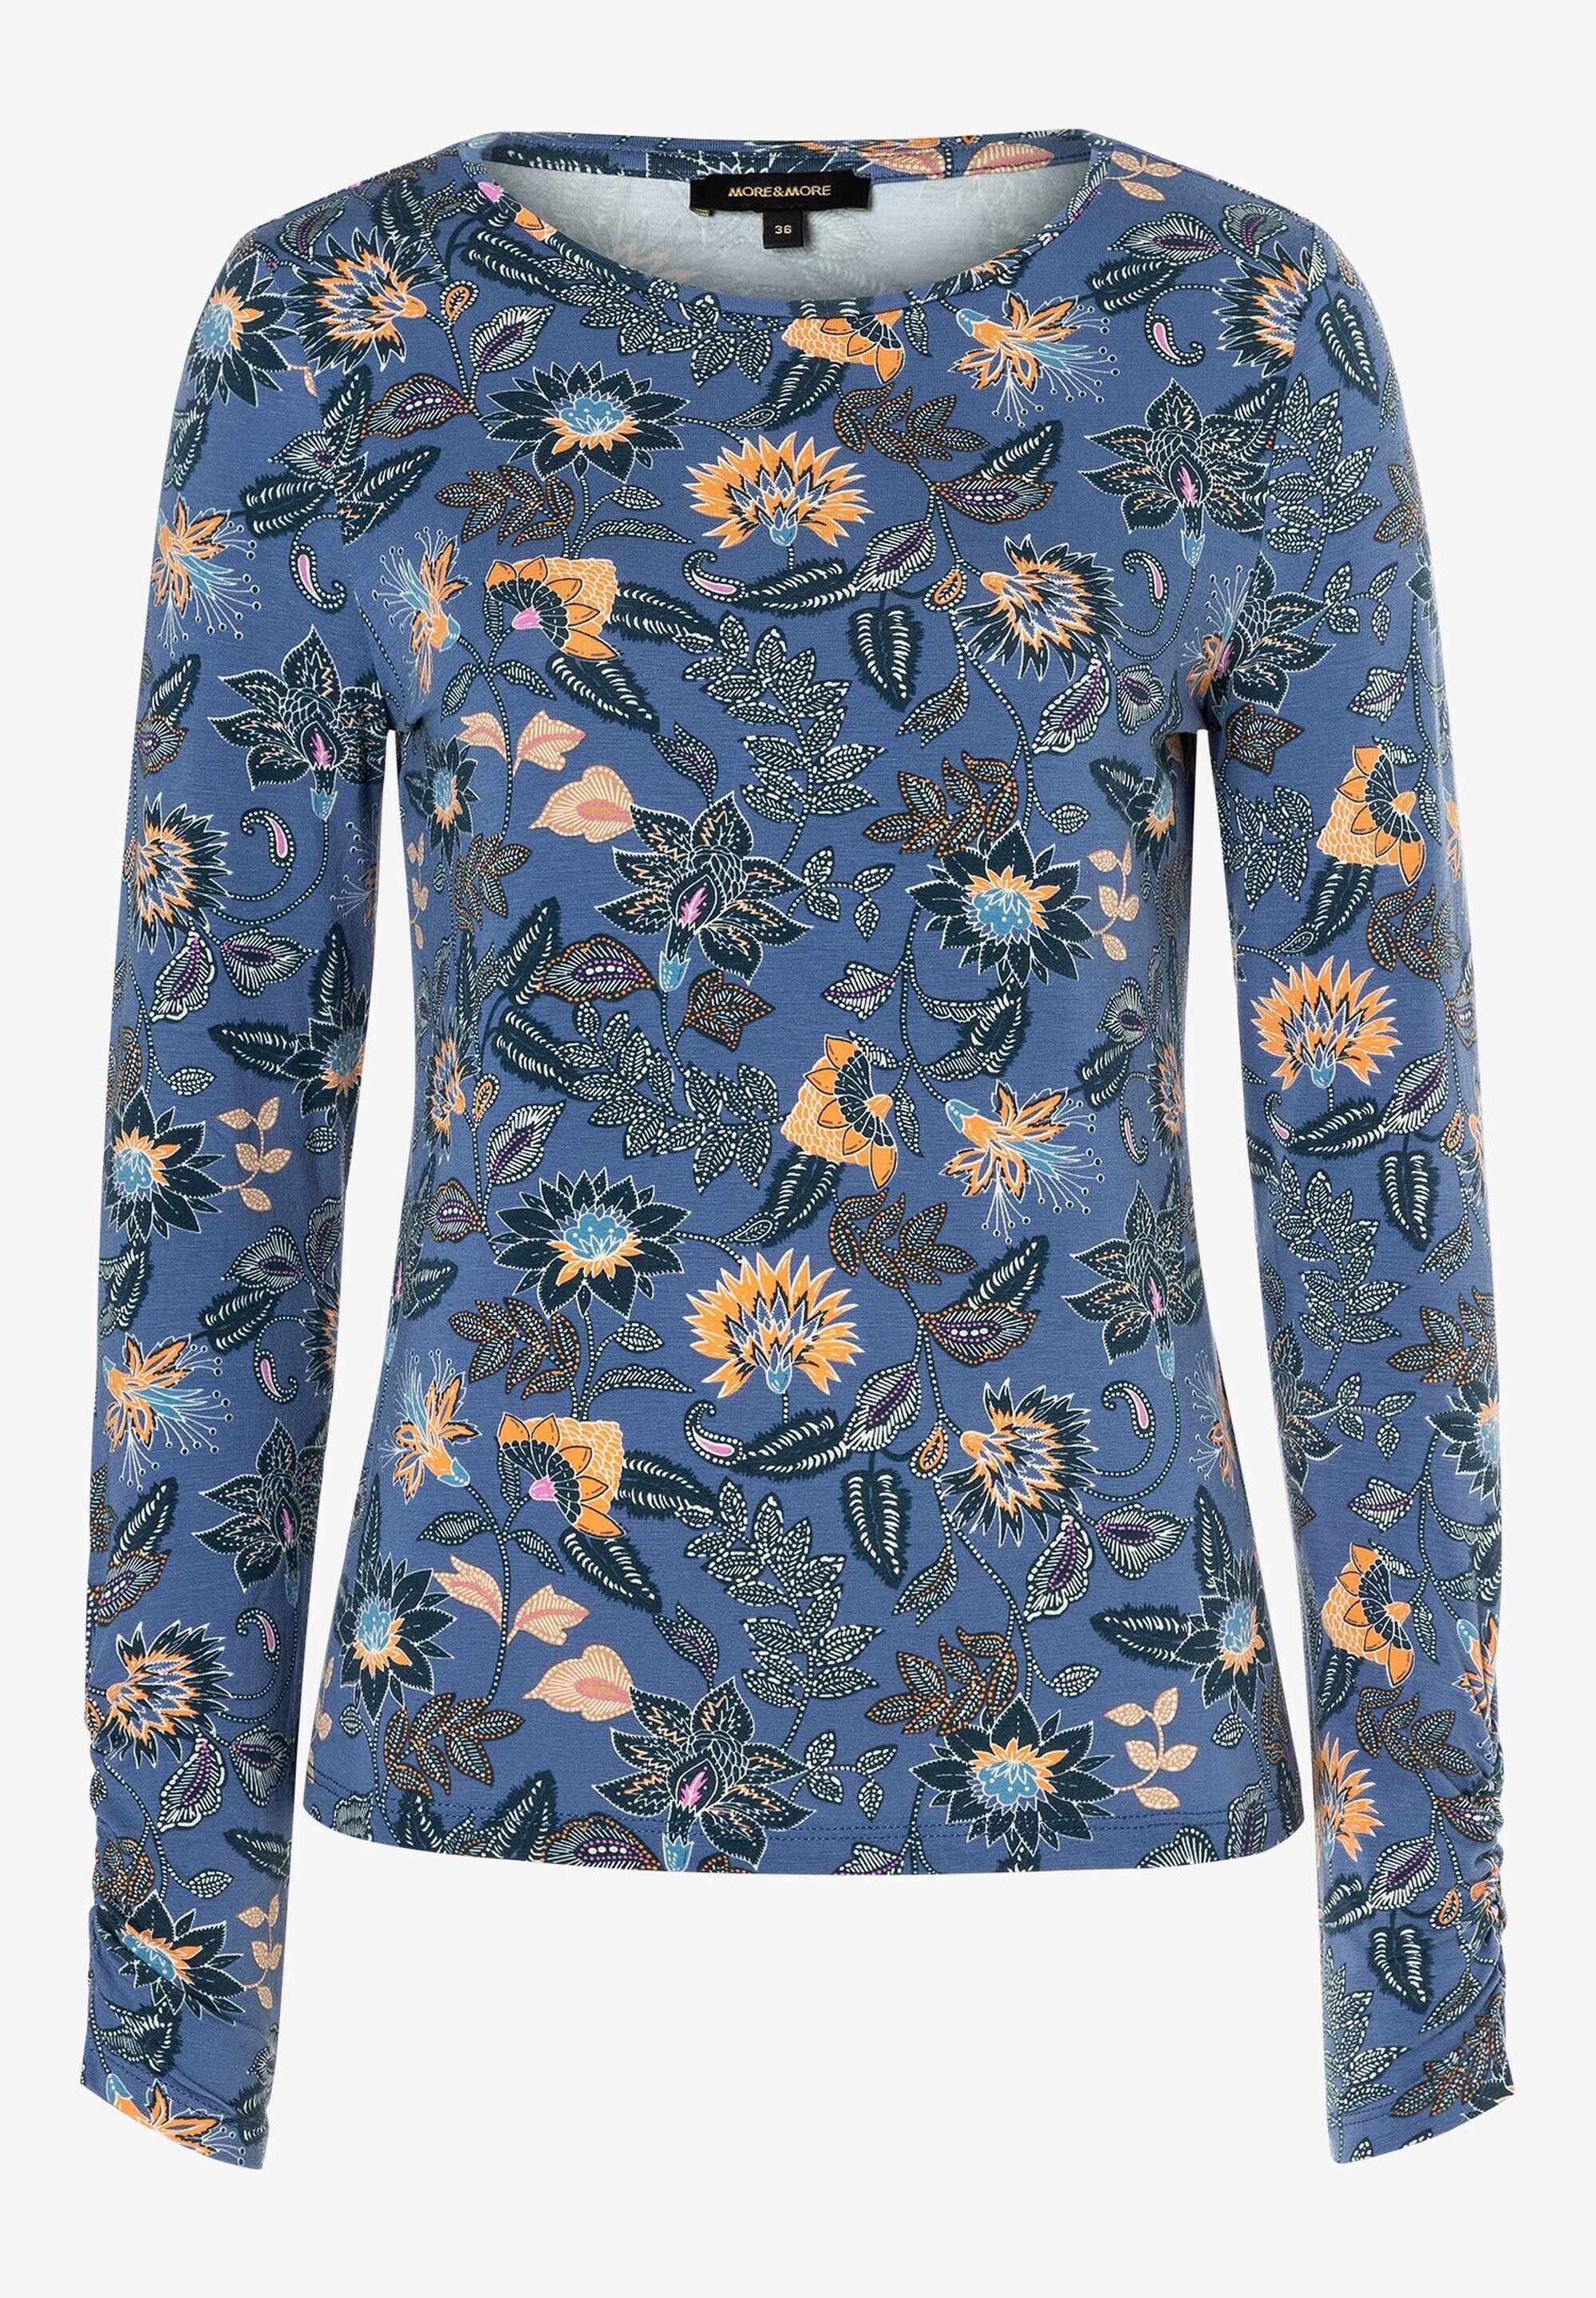 Langarmshirt mit Paisleyprint, smoke blue, Der & | Onlineshop MORE MORE offizielle Herbst-Kollektion